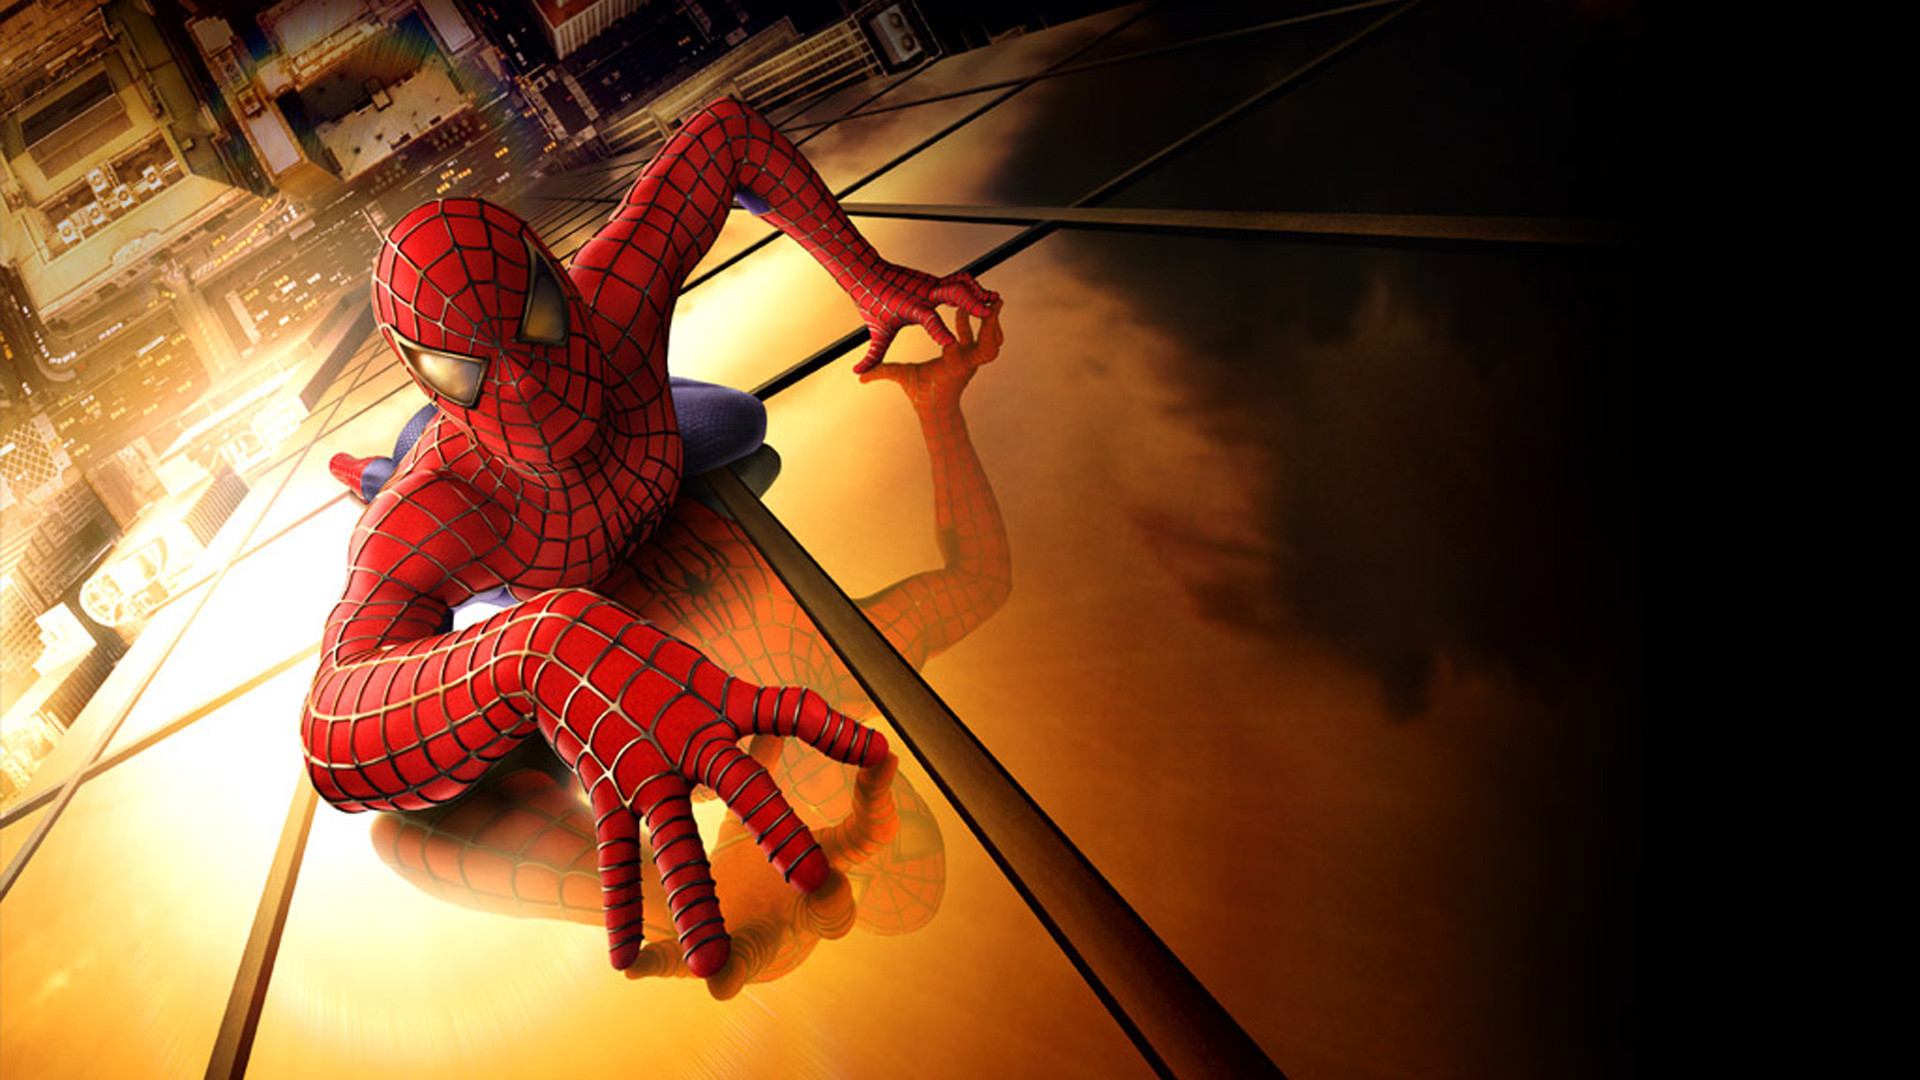 download spider man suit 2002